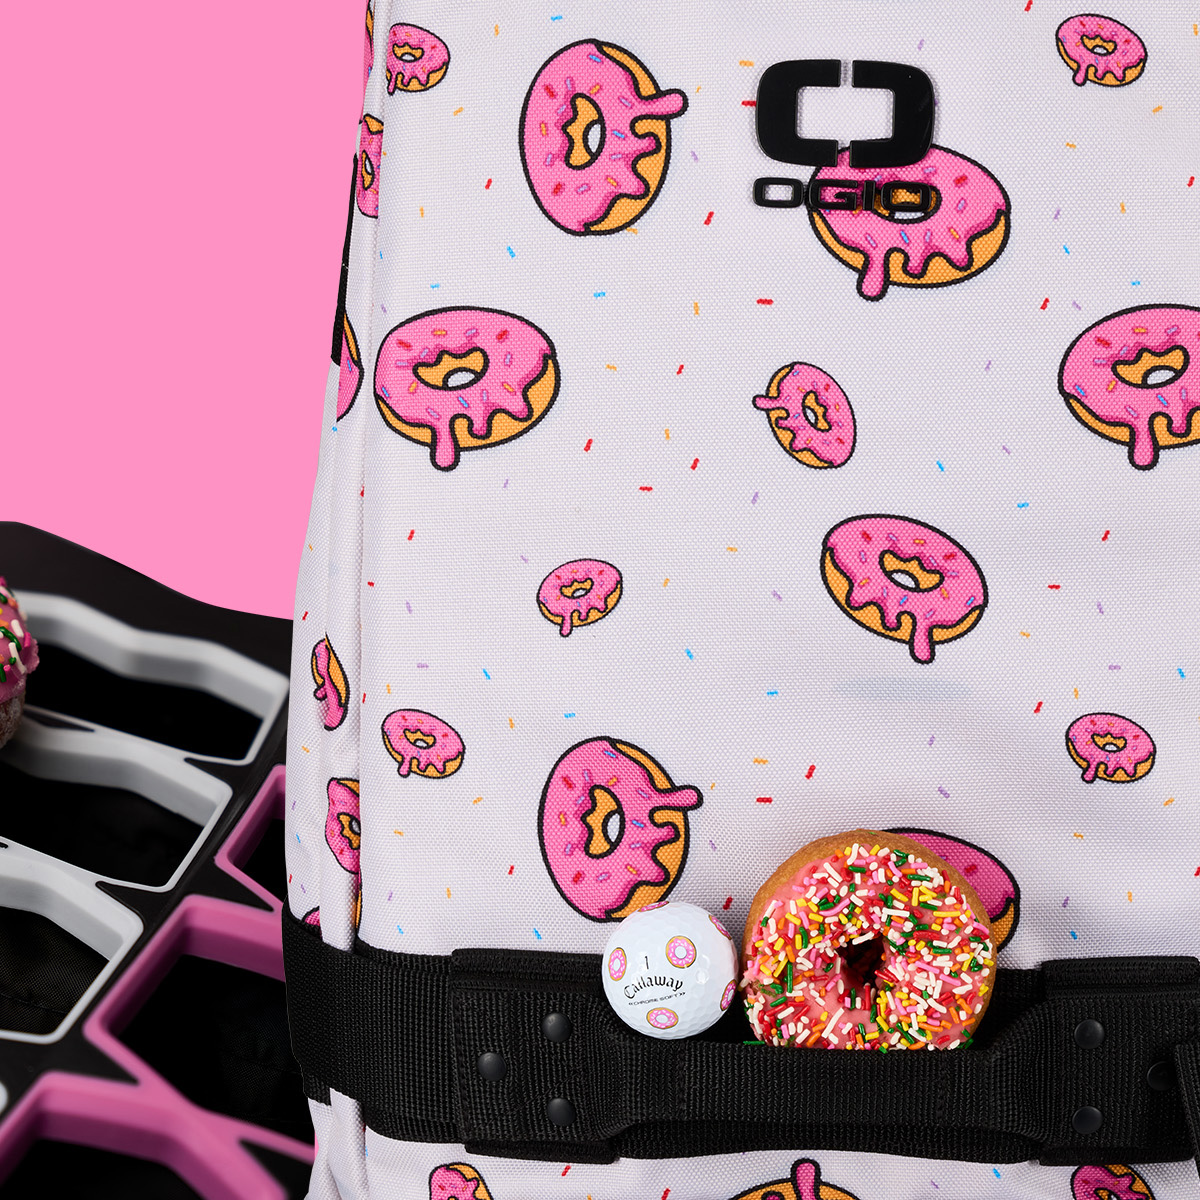 1x1-donuts-studio-image-4